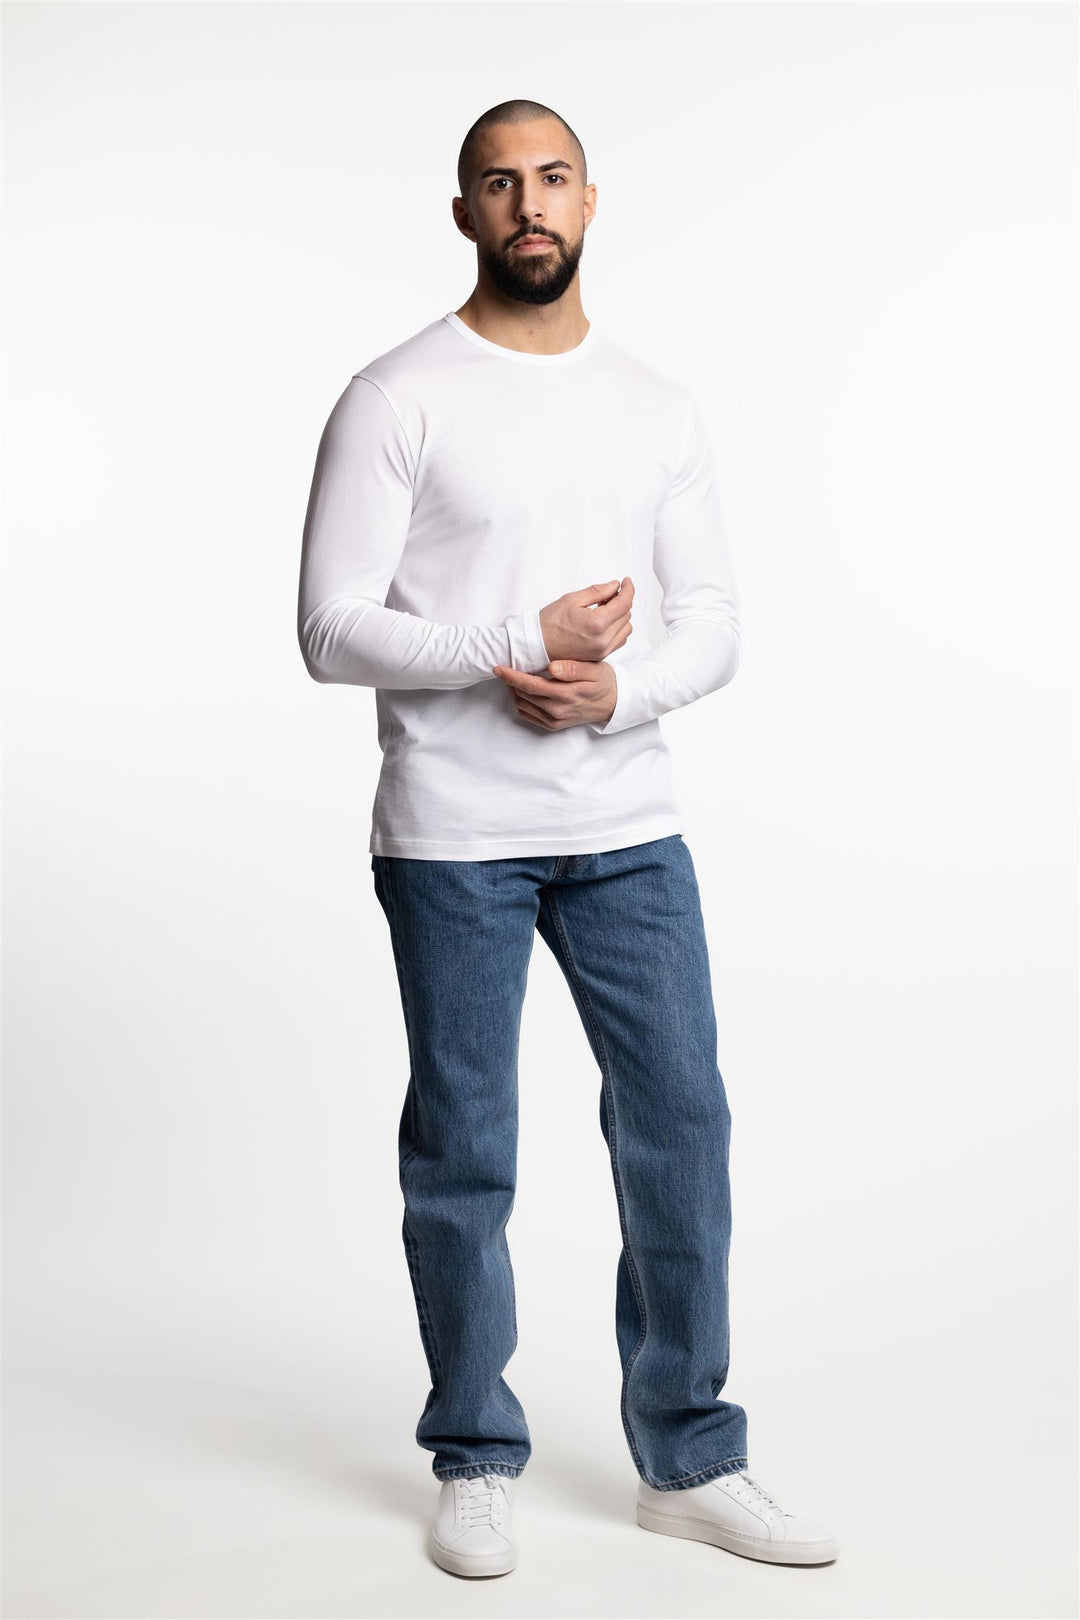 Long Sleeve Classic T-Shirt White